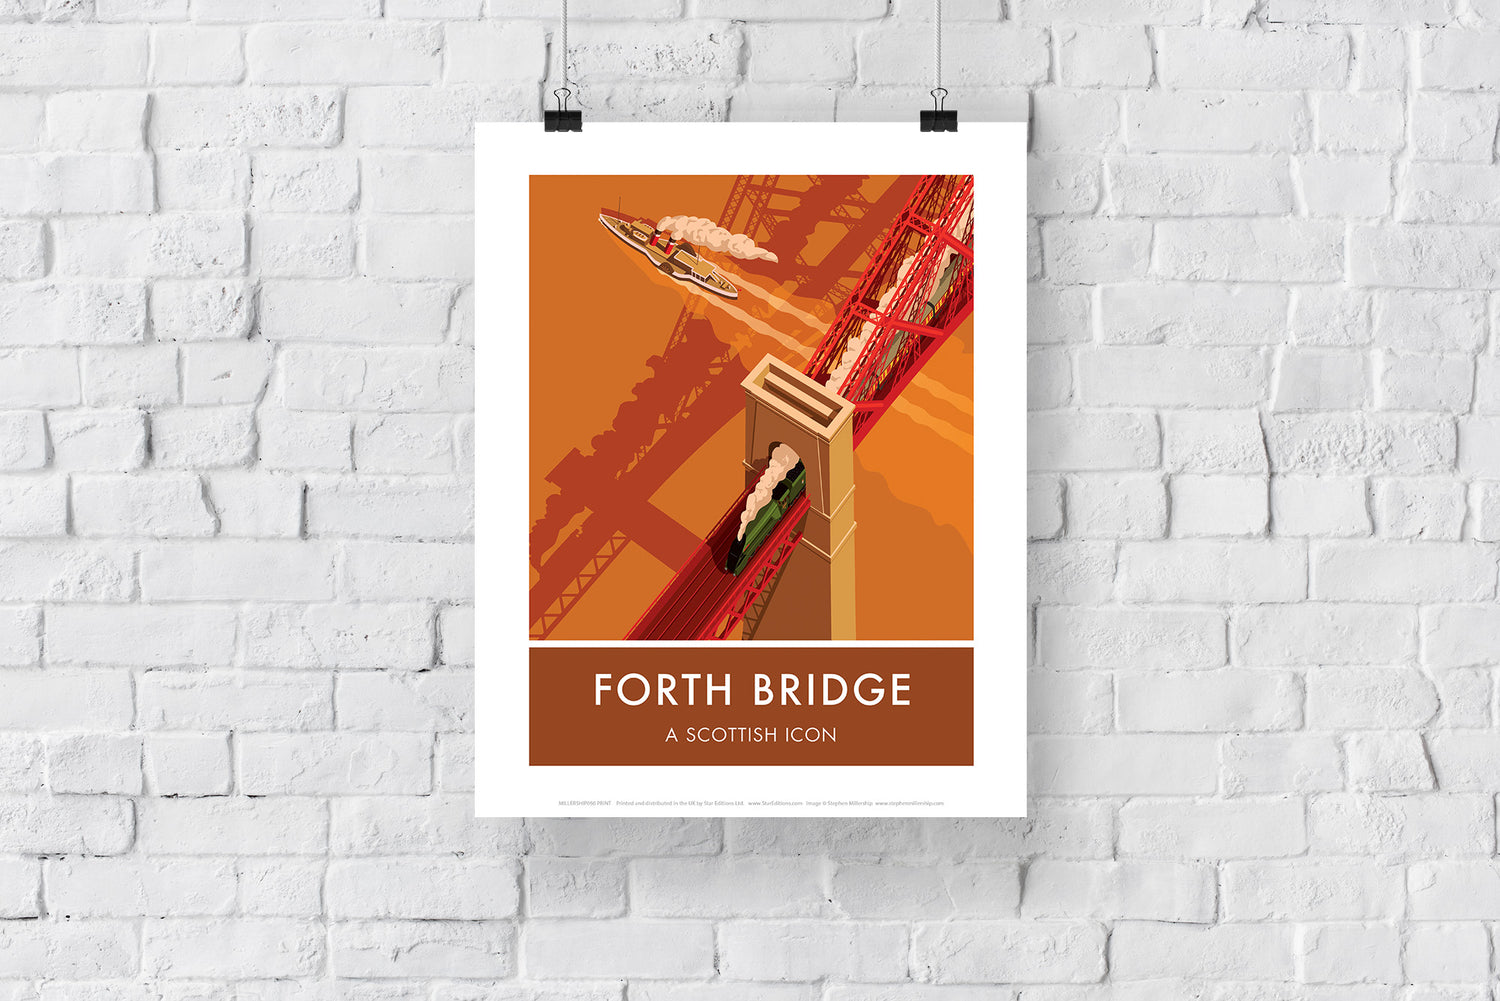 Forth Bridge, Edinburgh - Art Print